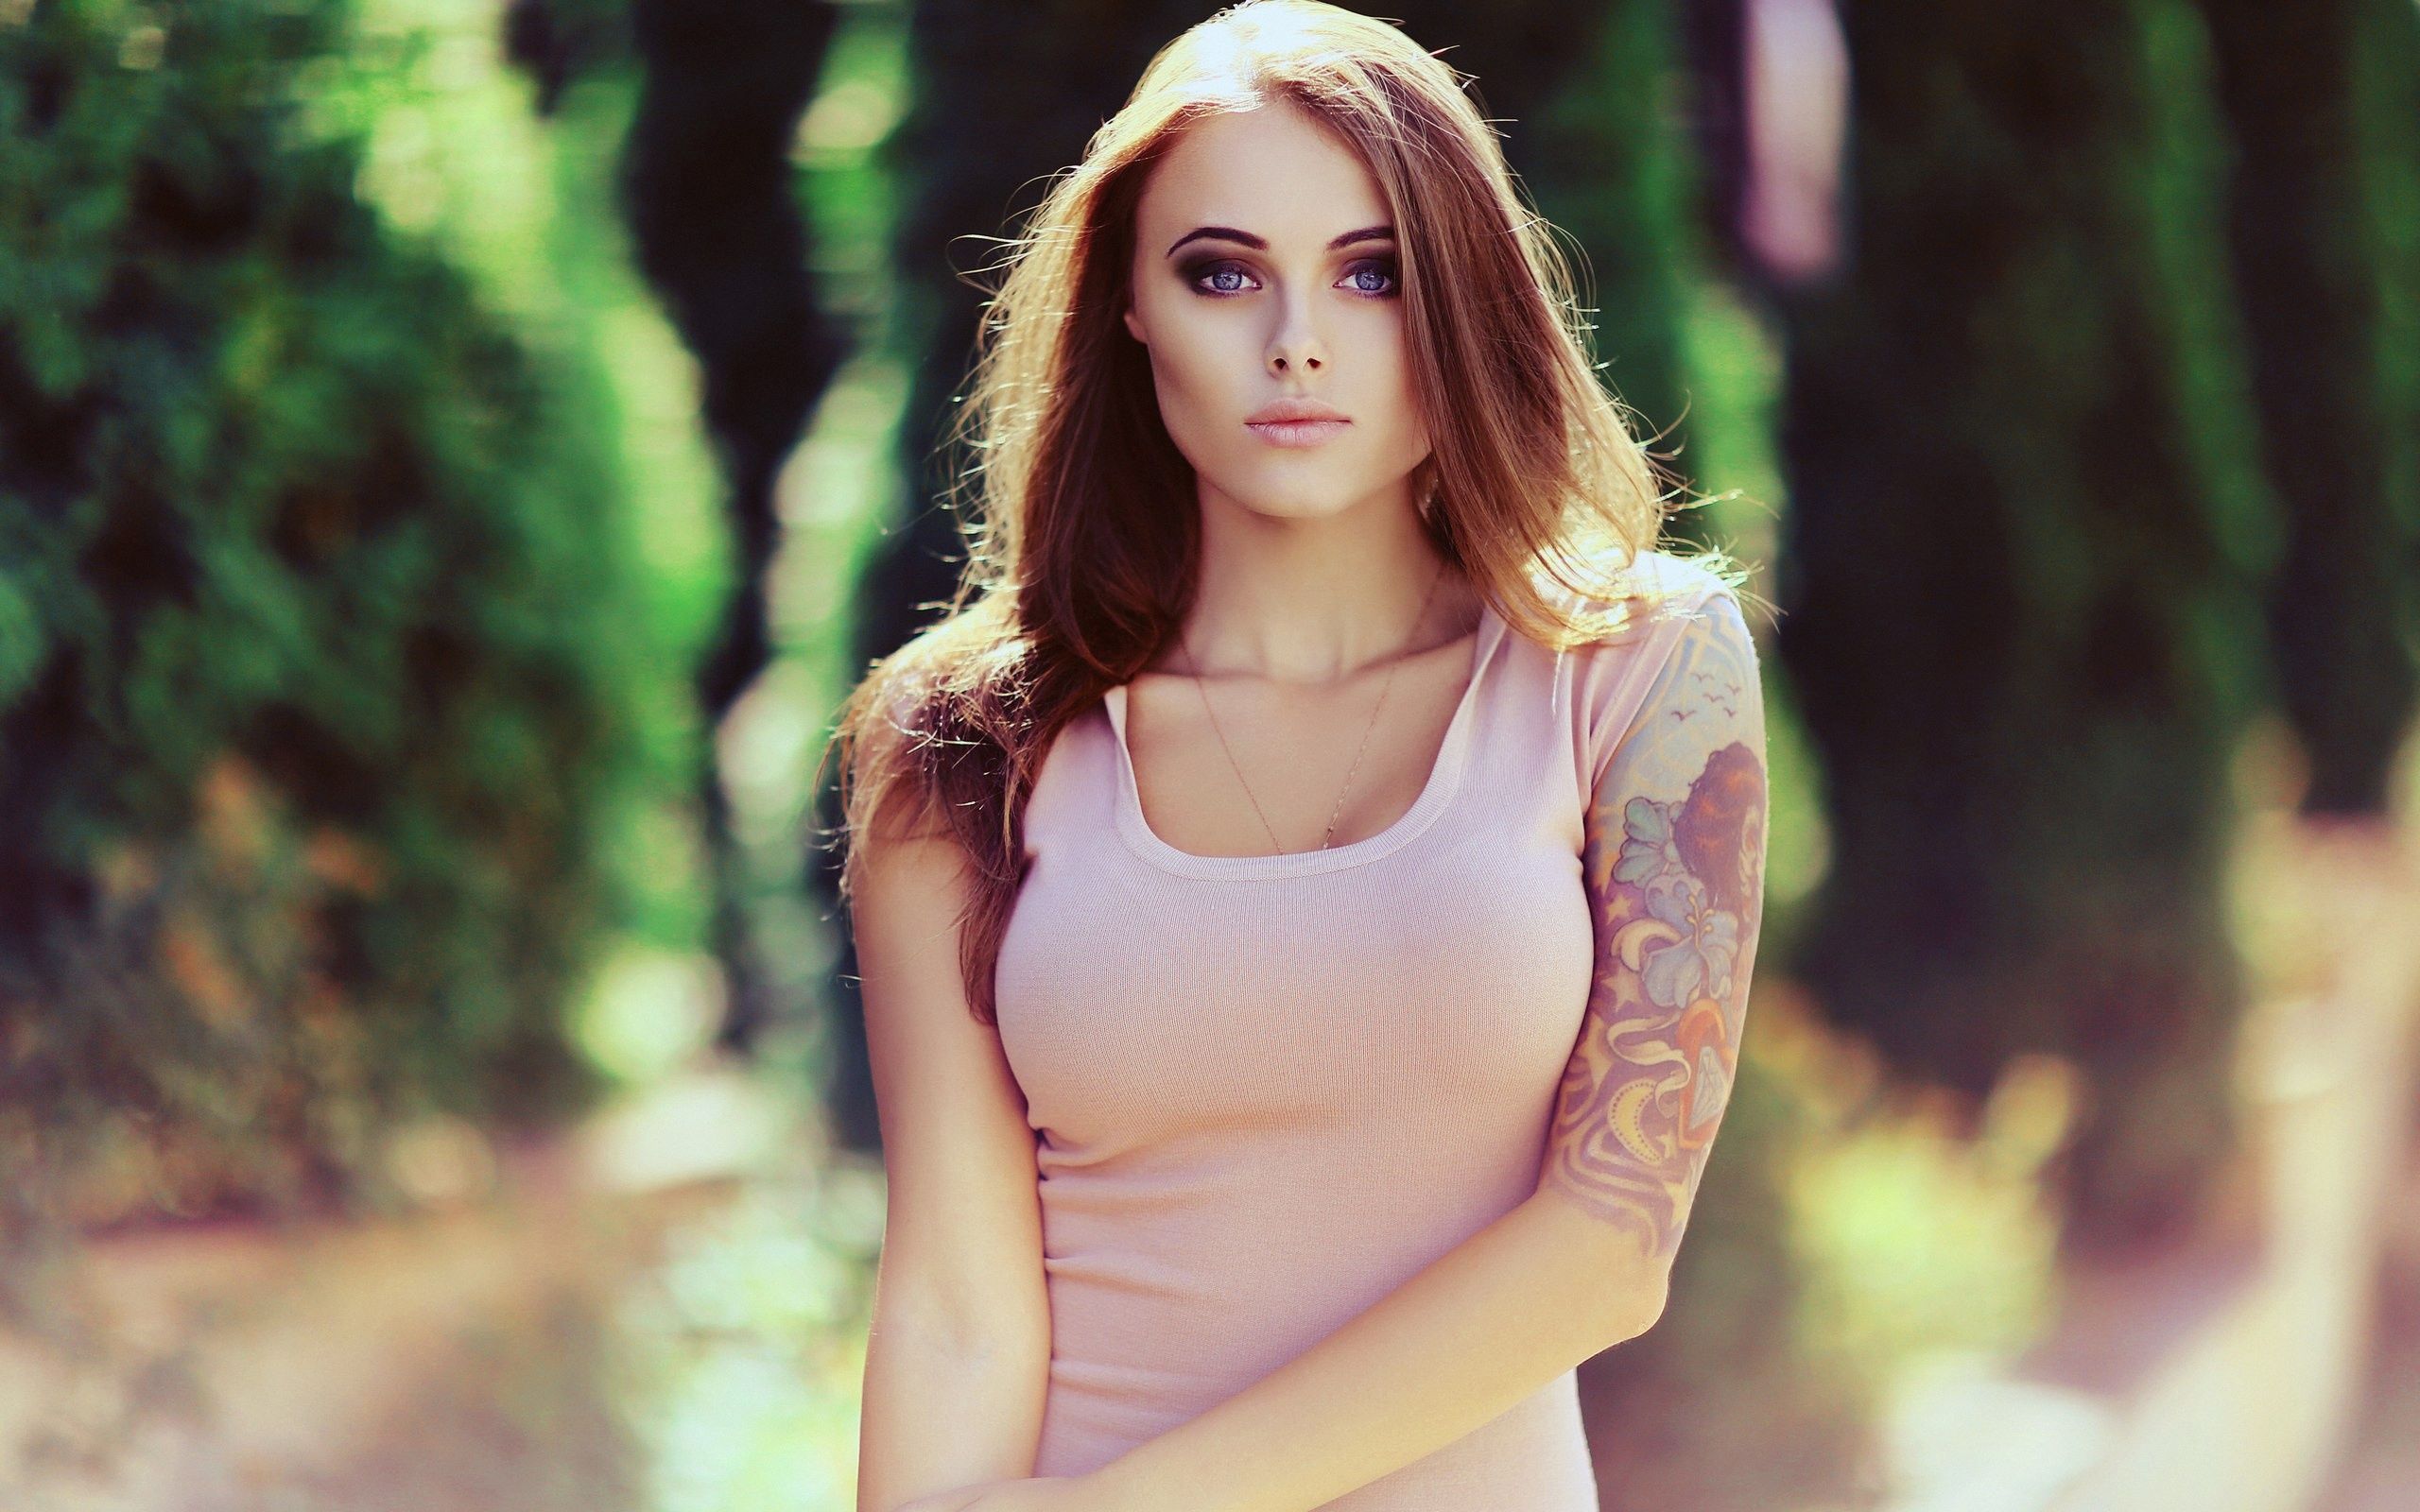 Stylish Girl With Tattoo